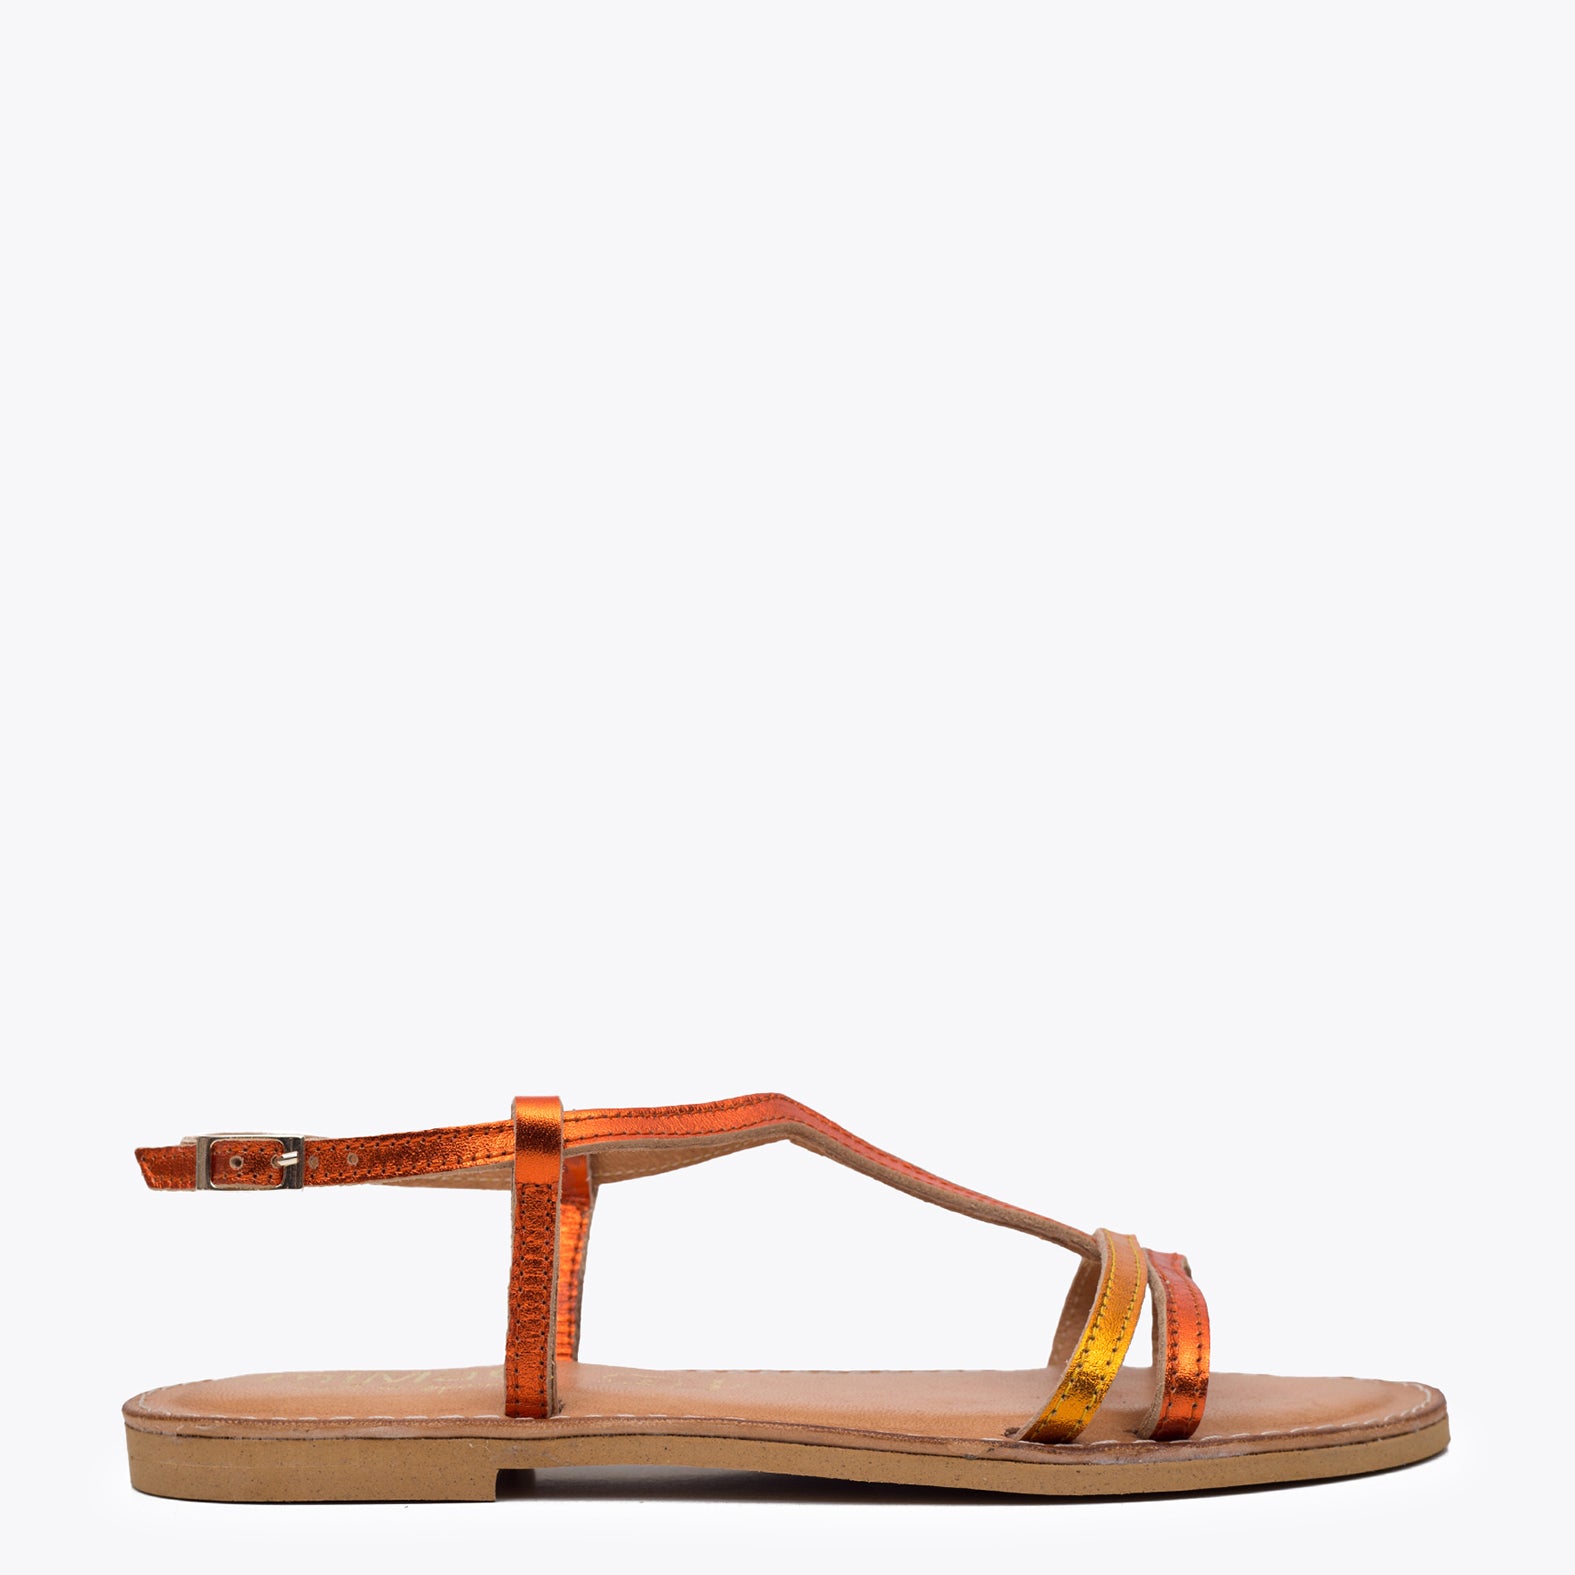 Sandalia plana metalizada |Comprar sandalias online | miMaO